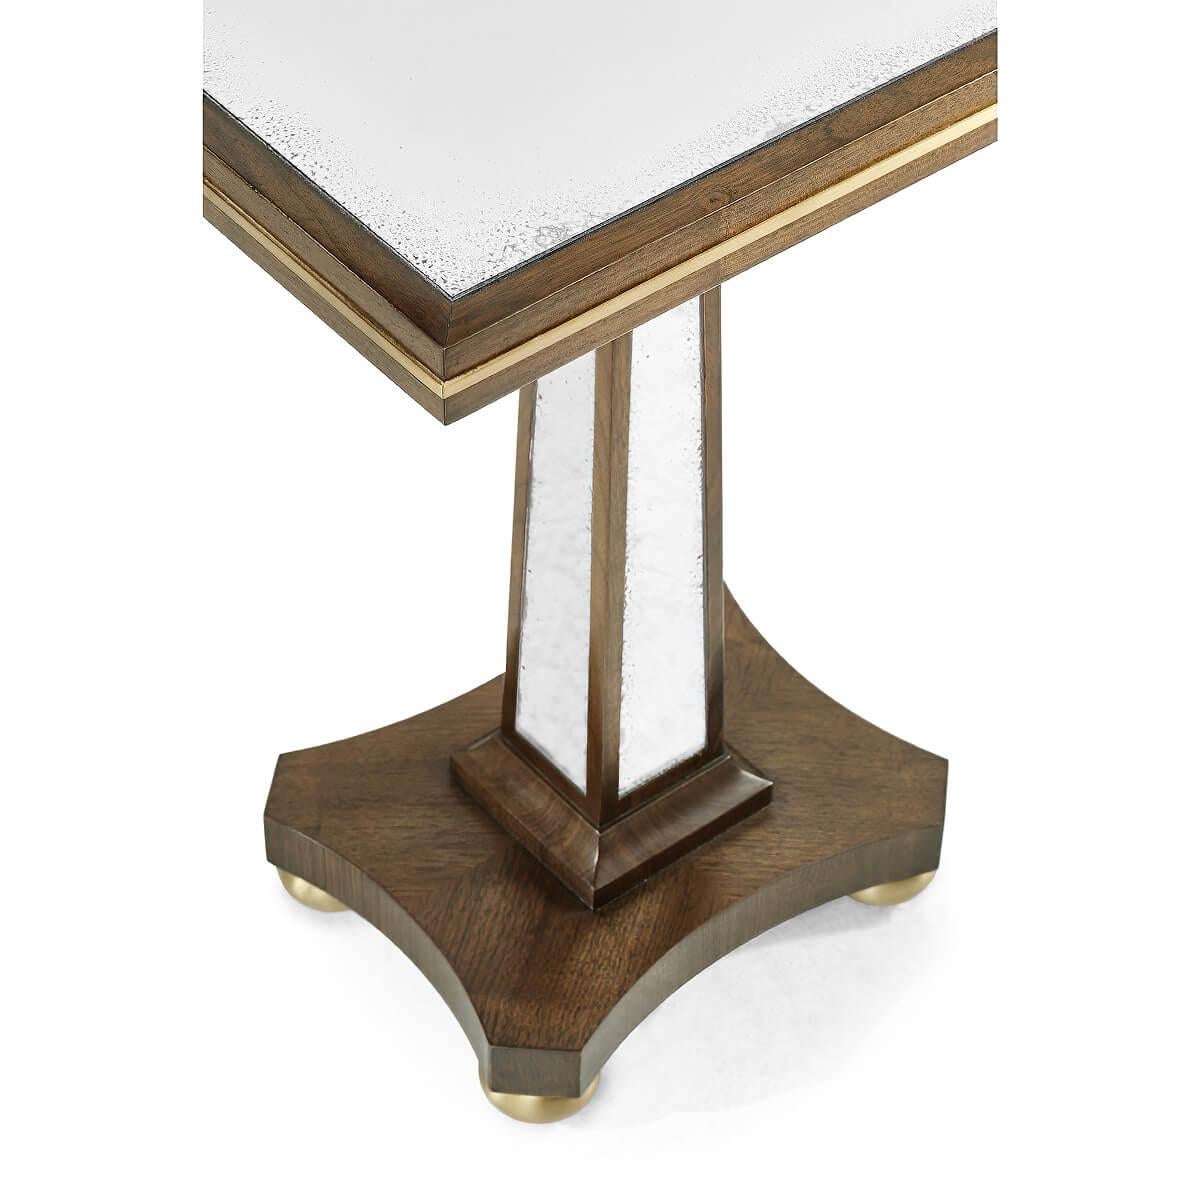 Contemporary Art Deco Style Pedestal Table